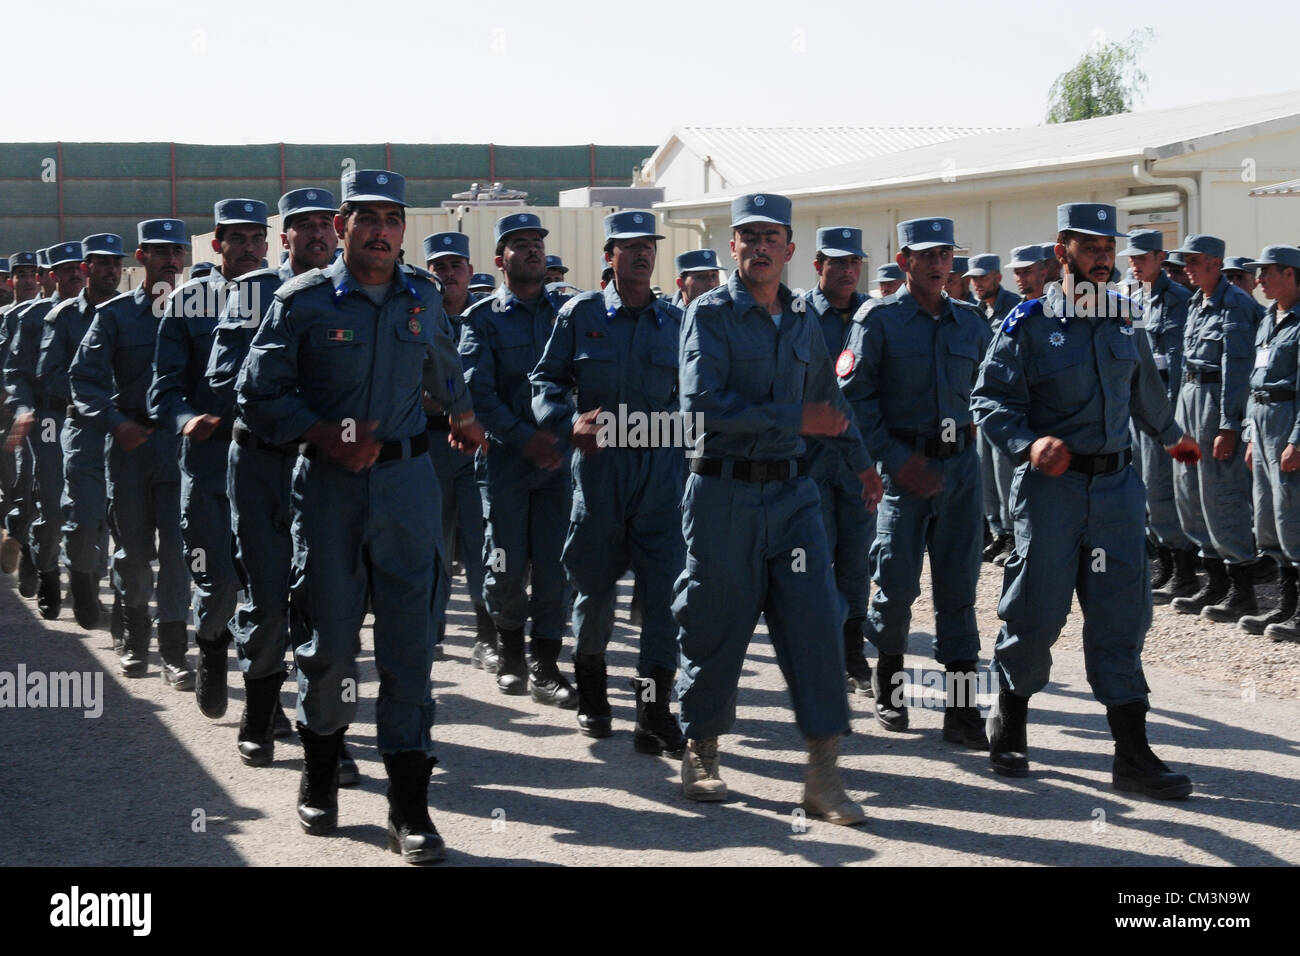 Members of the Afghan National Police parade on graduation day at Regional Training Center-Kandahar September 27, 2012 in Forward Operating Base Scorpion, Kandahar province, Afghanistan. Stock Photo